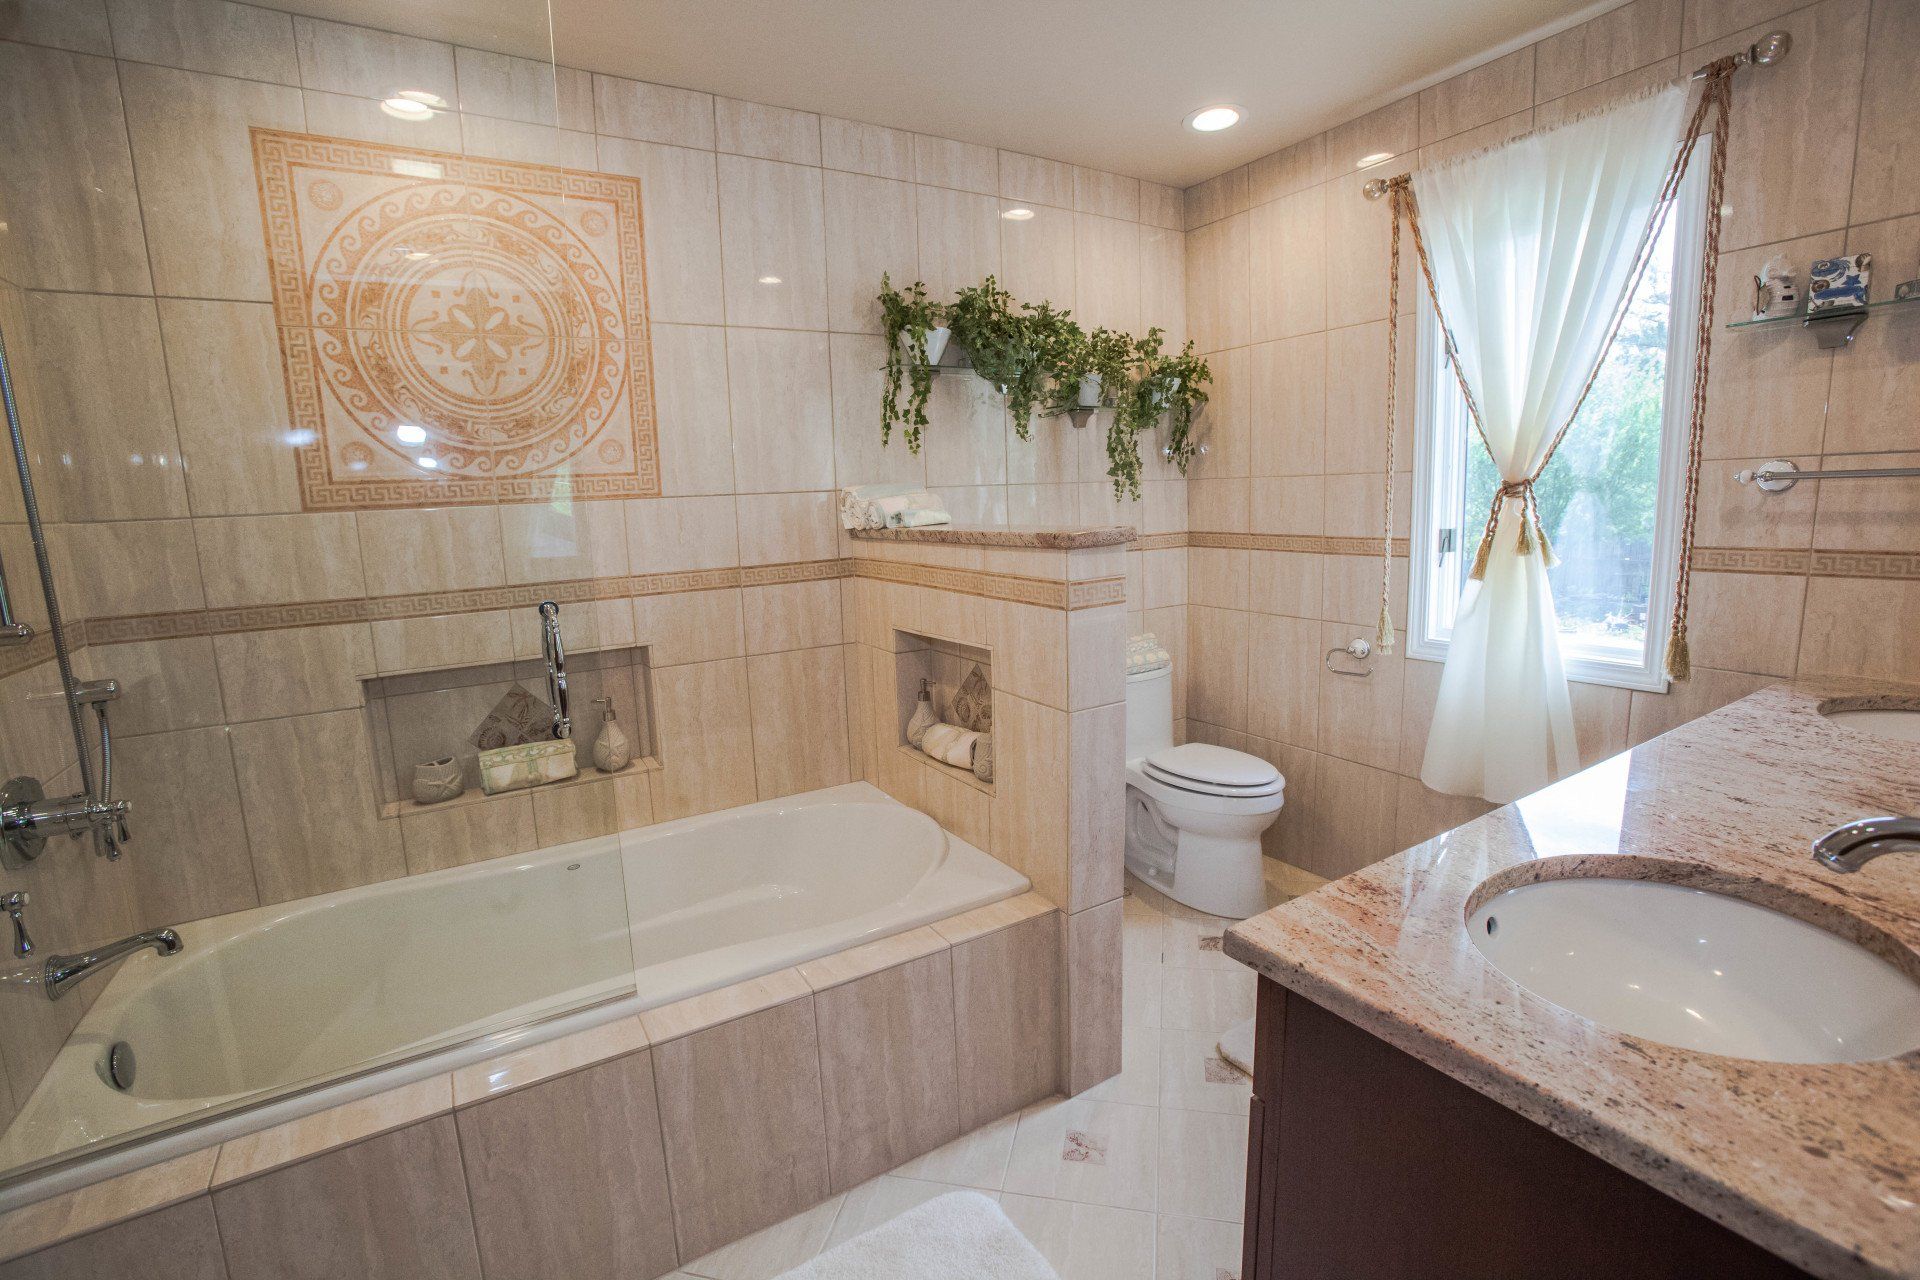 Bathroom Remodels — Clean Remodeling of Bathroom in Mount Prospect, IL